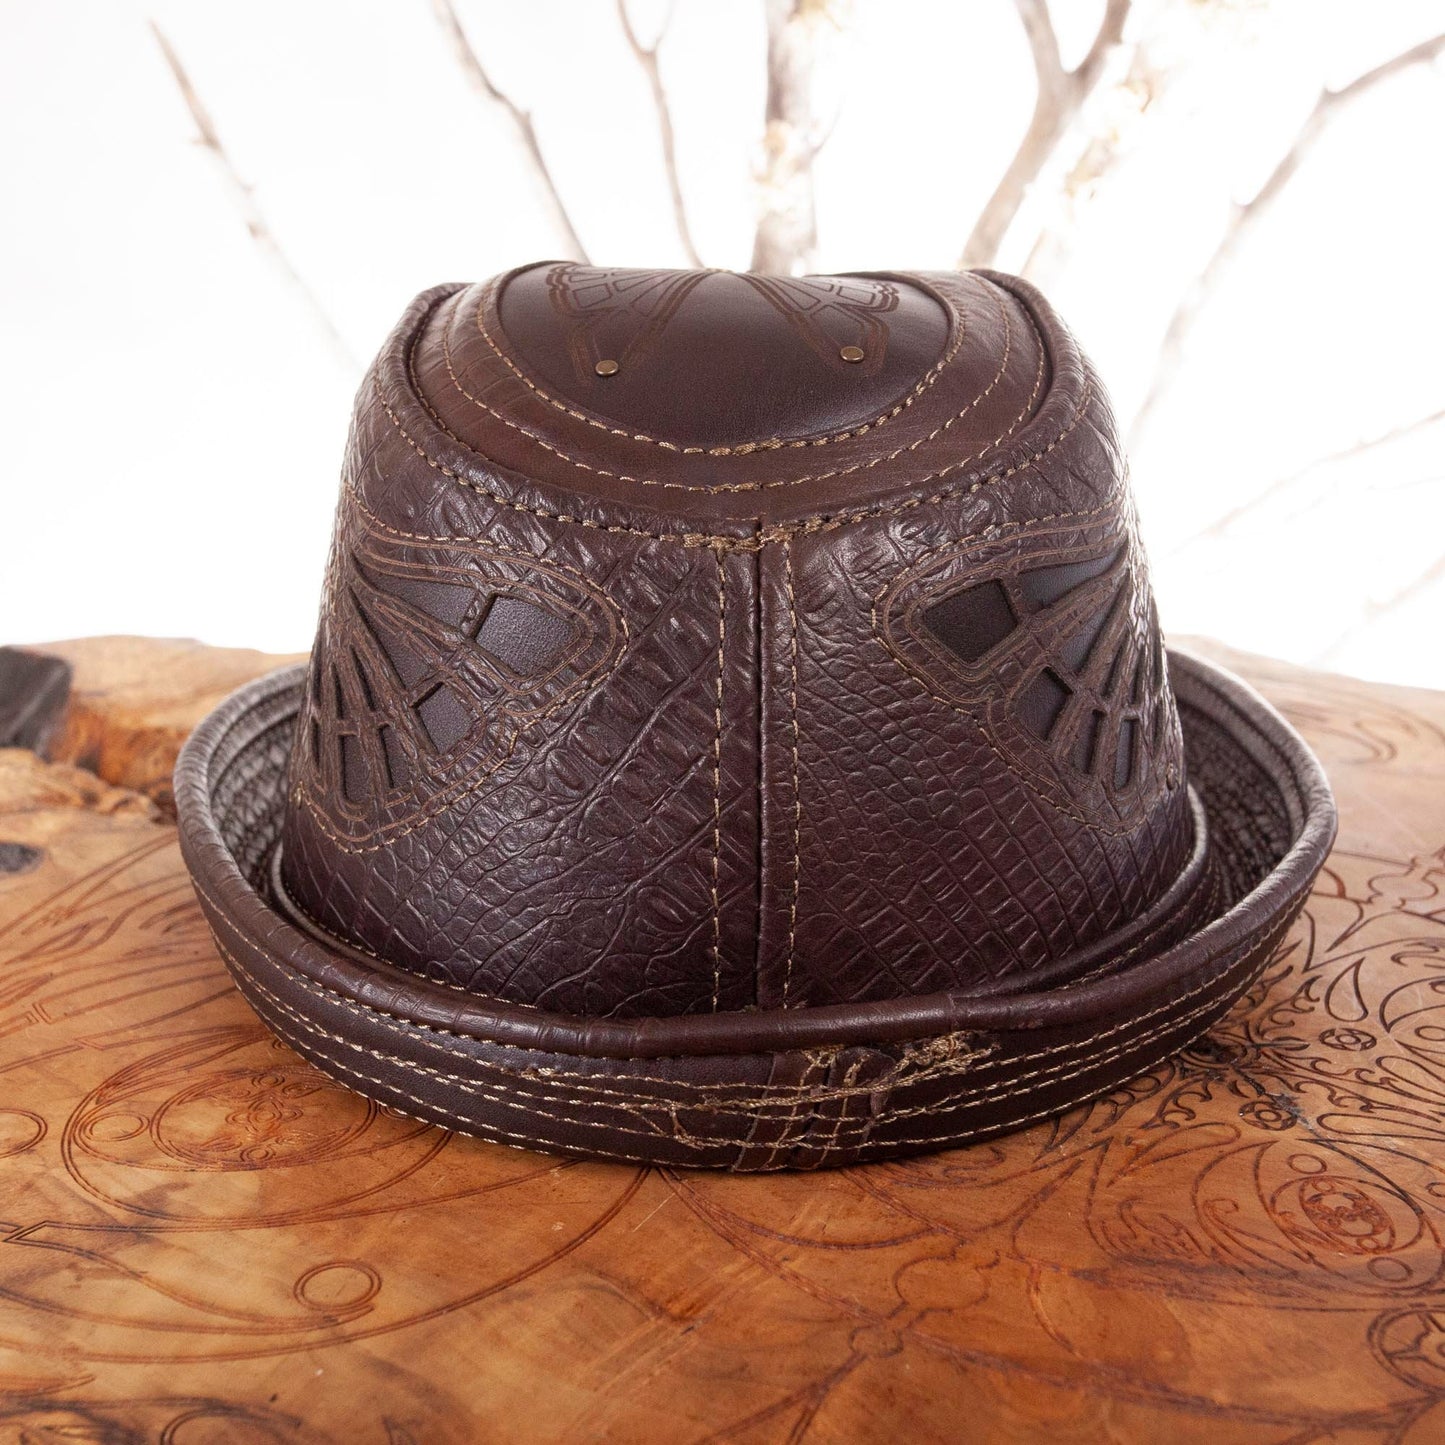 Leather Fedora | Sassafras Fedora | Filigree | Brown Alligator Print | Trilby | Adjustable Brim | Art Engraved | Burning Man | CUSTOM MADE